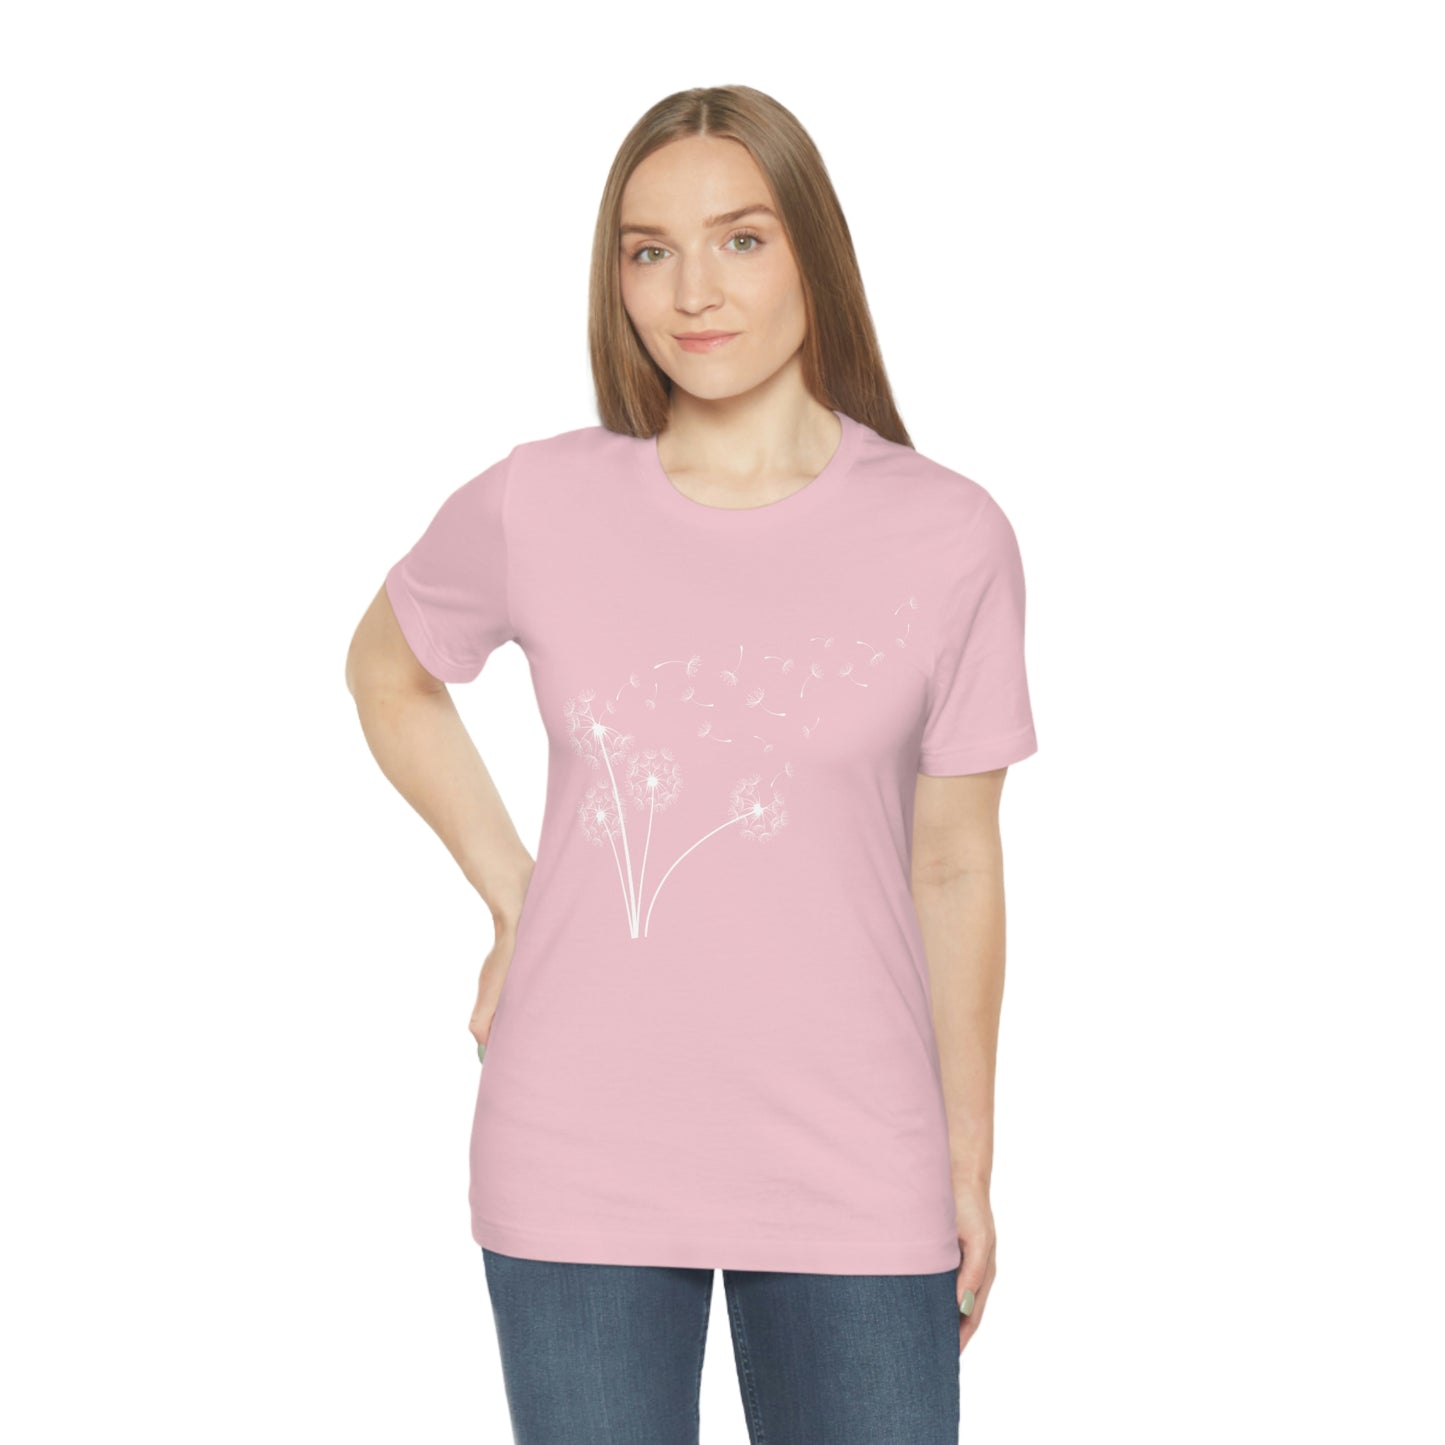 Dandelion Shirt, Boho Windflower Shirt, Dandelion Shirt for Her, Windflower Tee, Meditation Gift, Yoga Shirt, Inspirational Shirt, Bday Tees